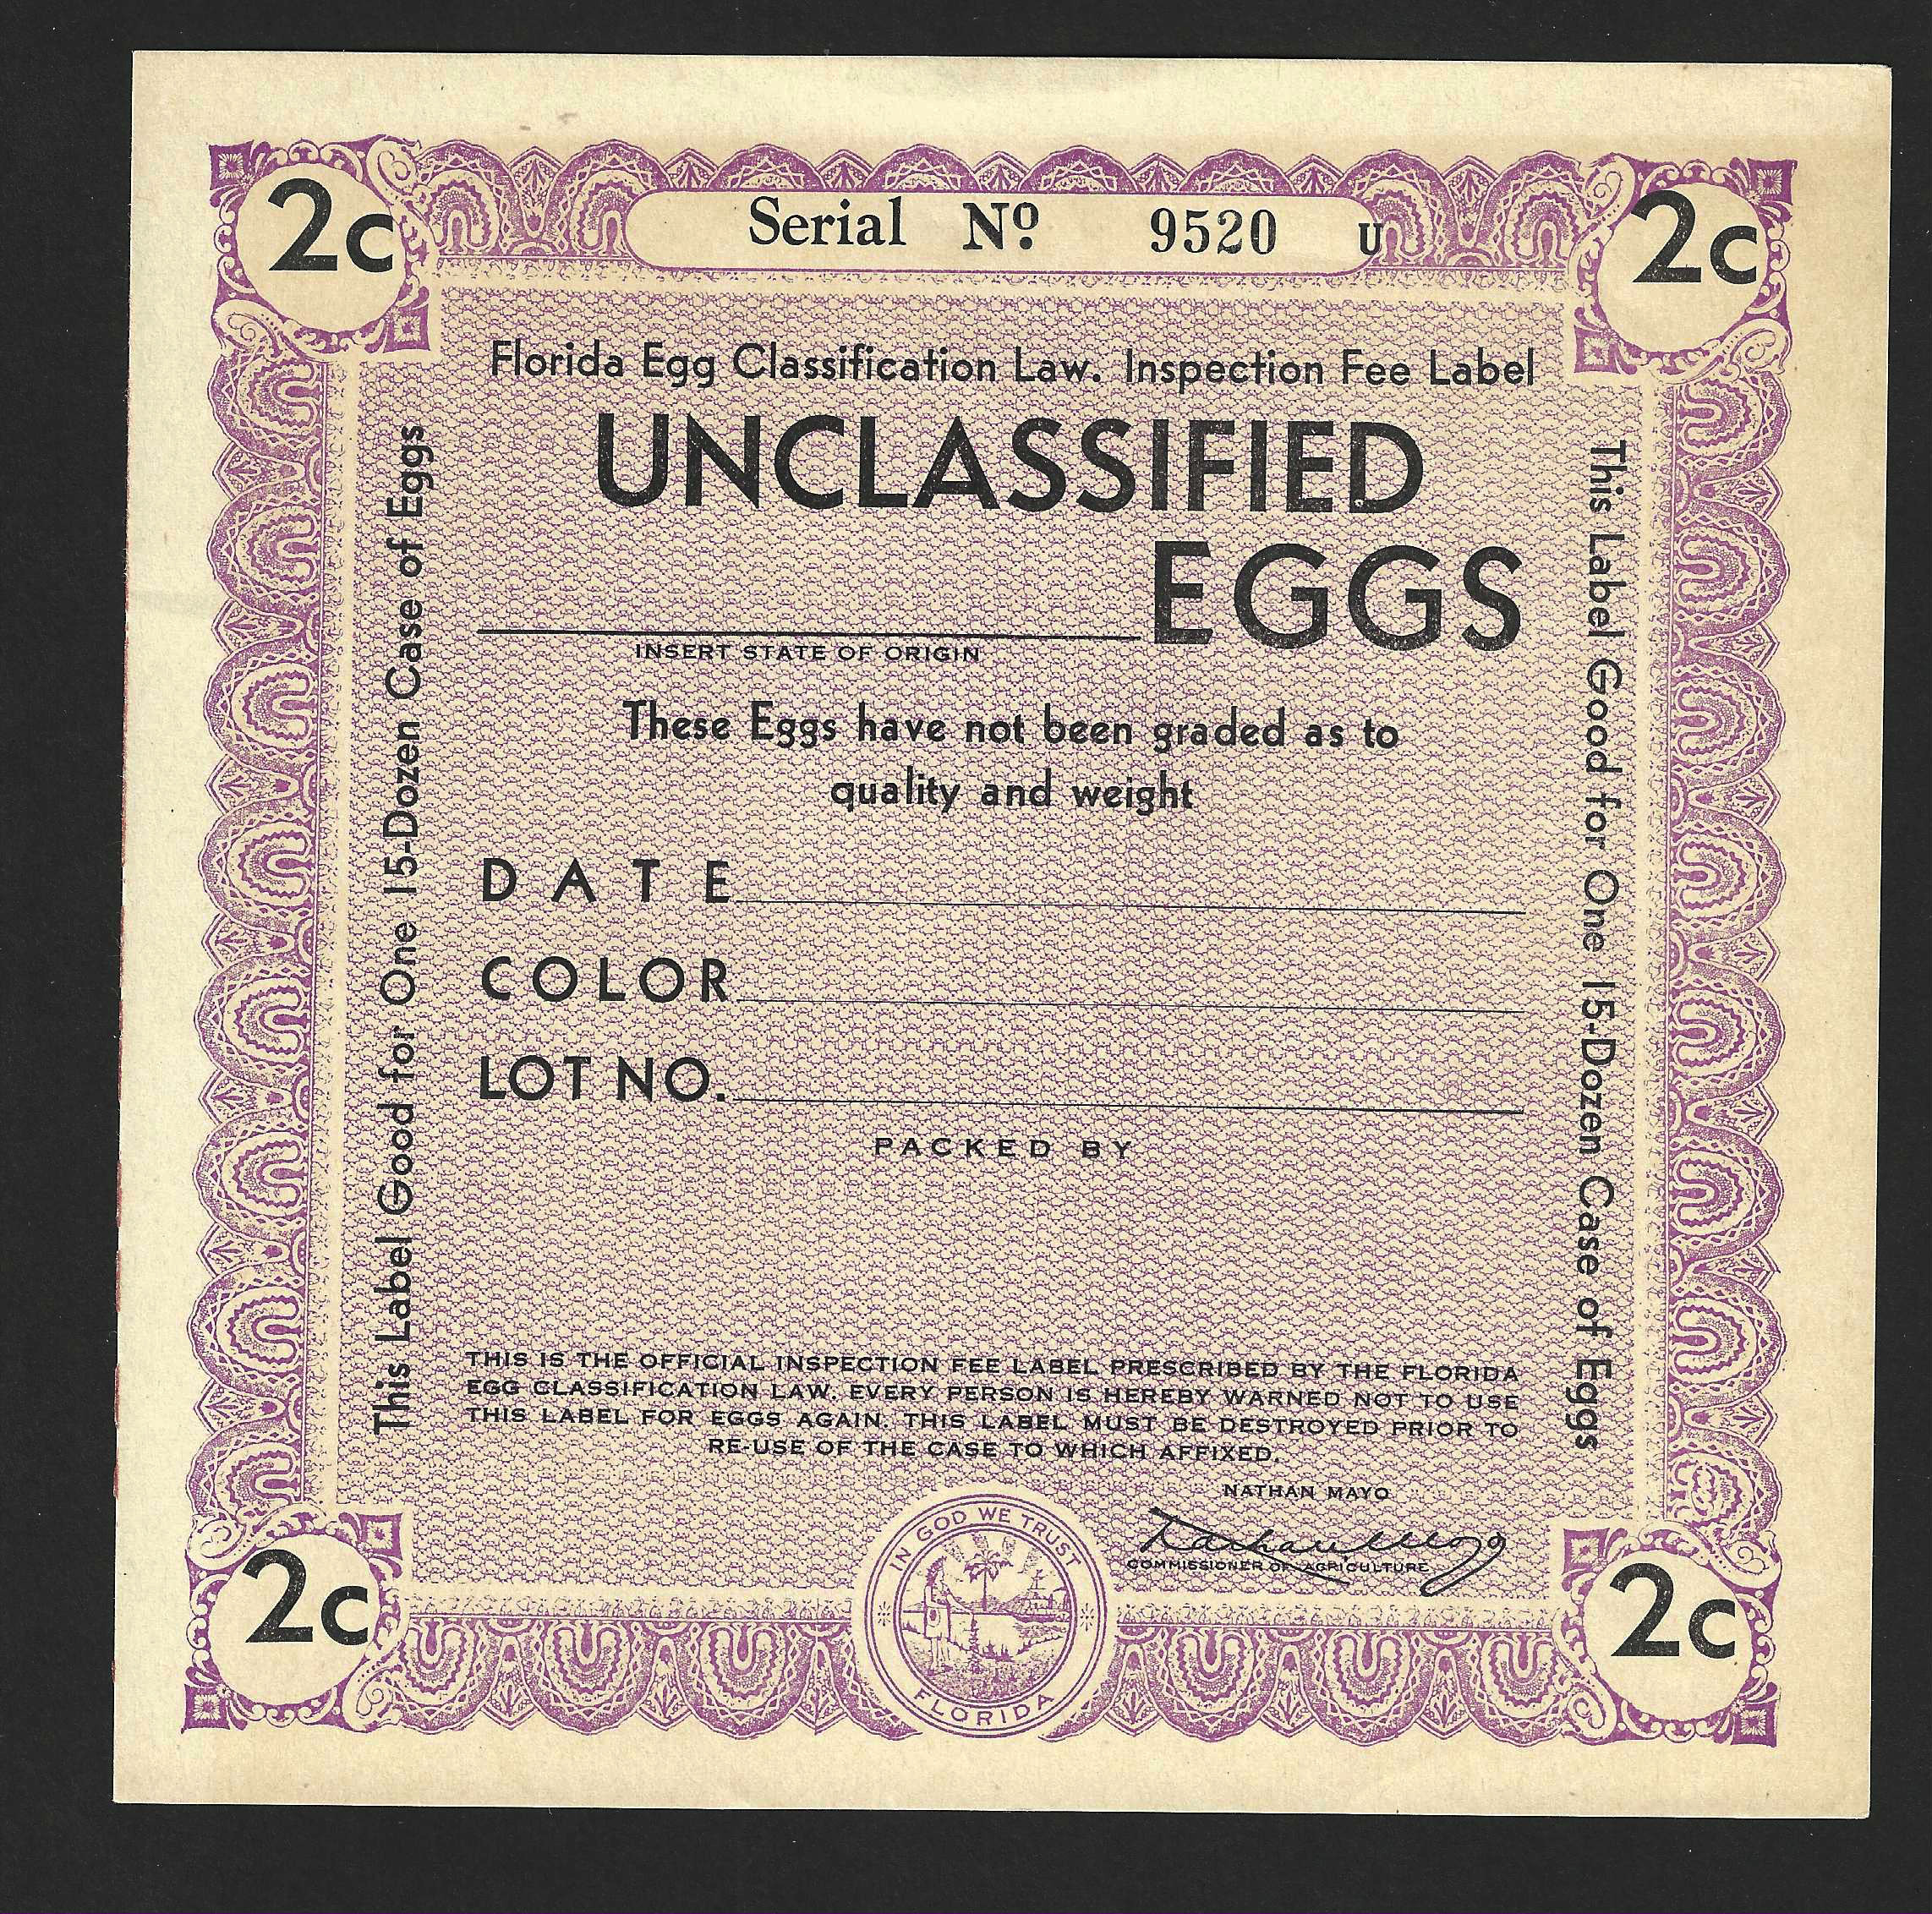 Fl egg case E89 2¢ Unclassified Eggs (U) lt purple MNH slight toning unpriced in catalog